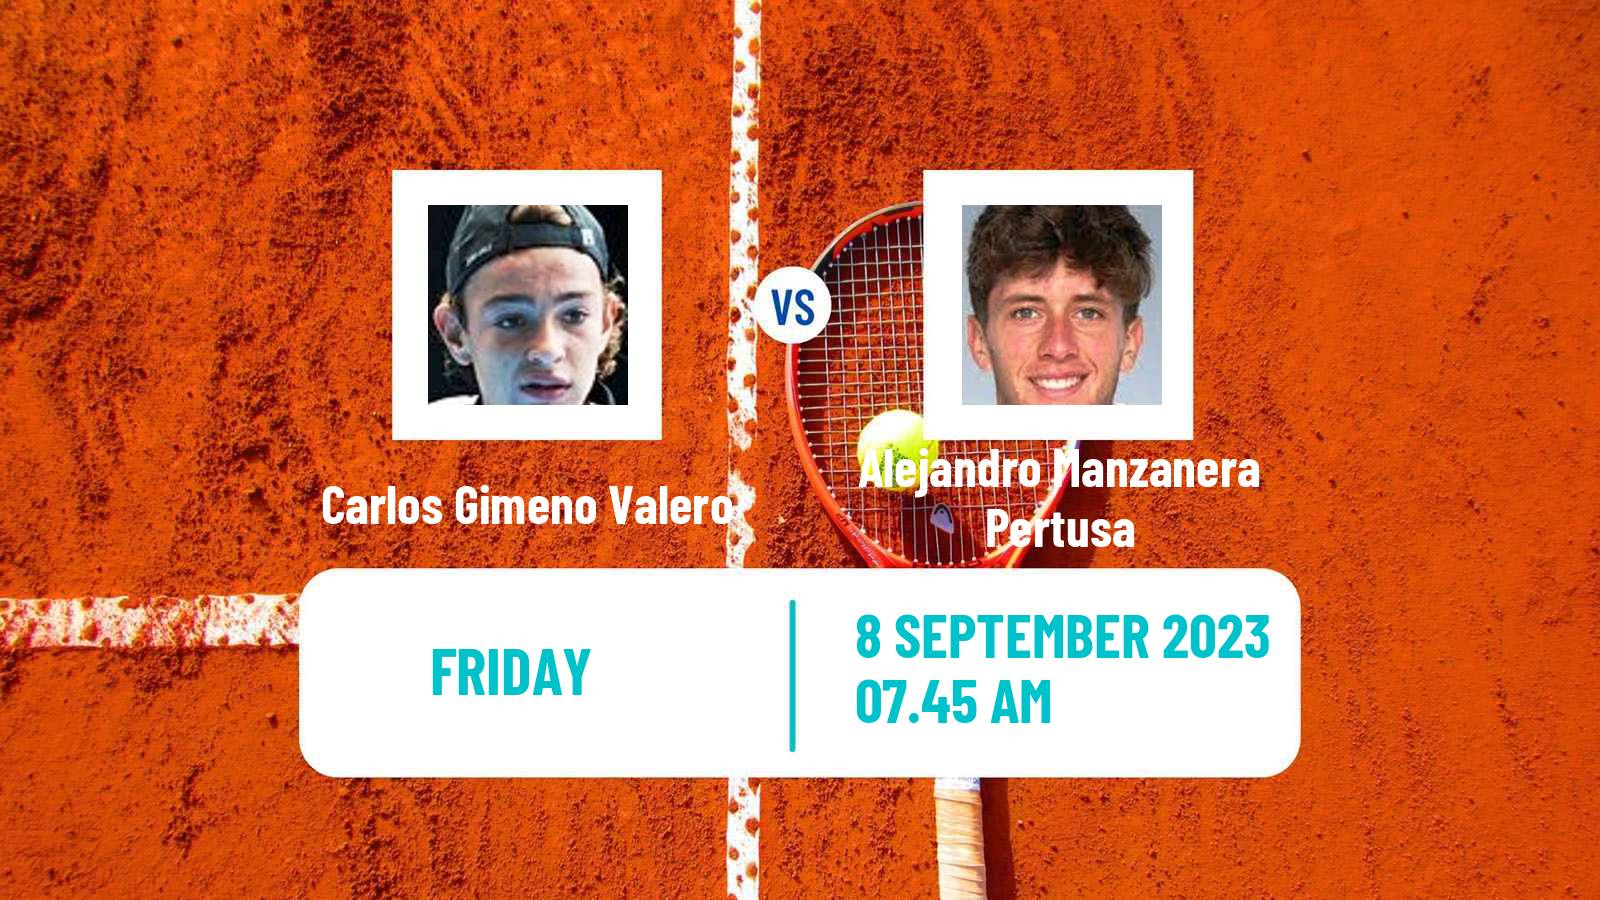 Tennis ITF M15 Madrid Men Carlos Gimeno Valero - Alejandro Manzanera Pertusa